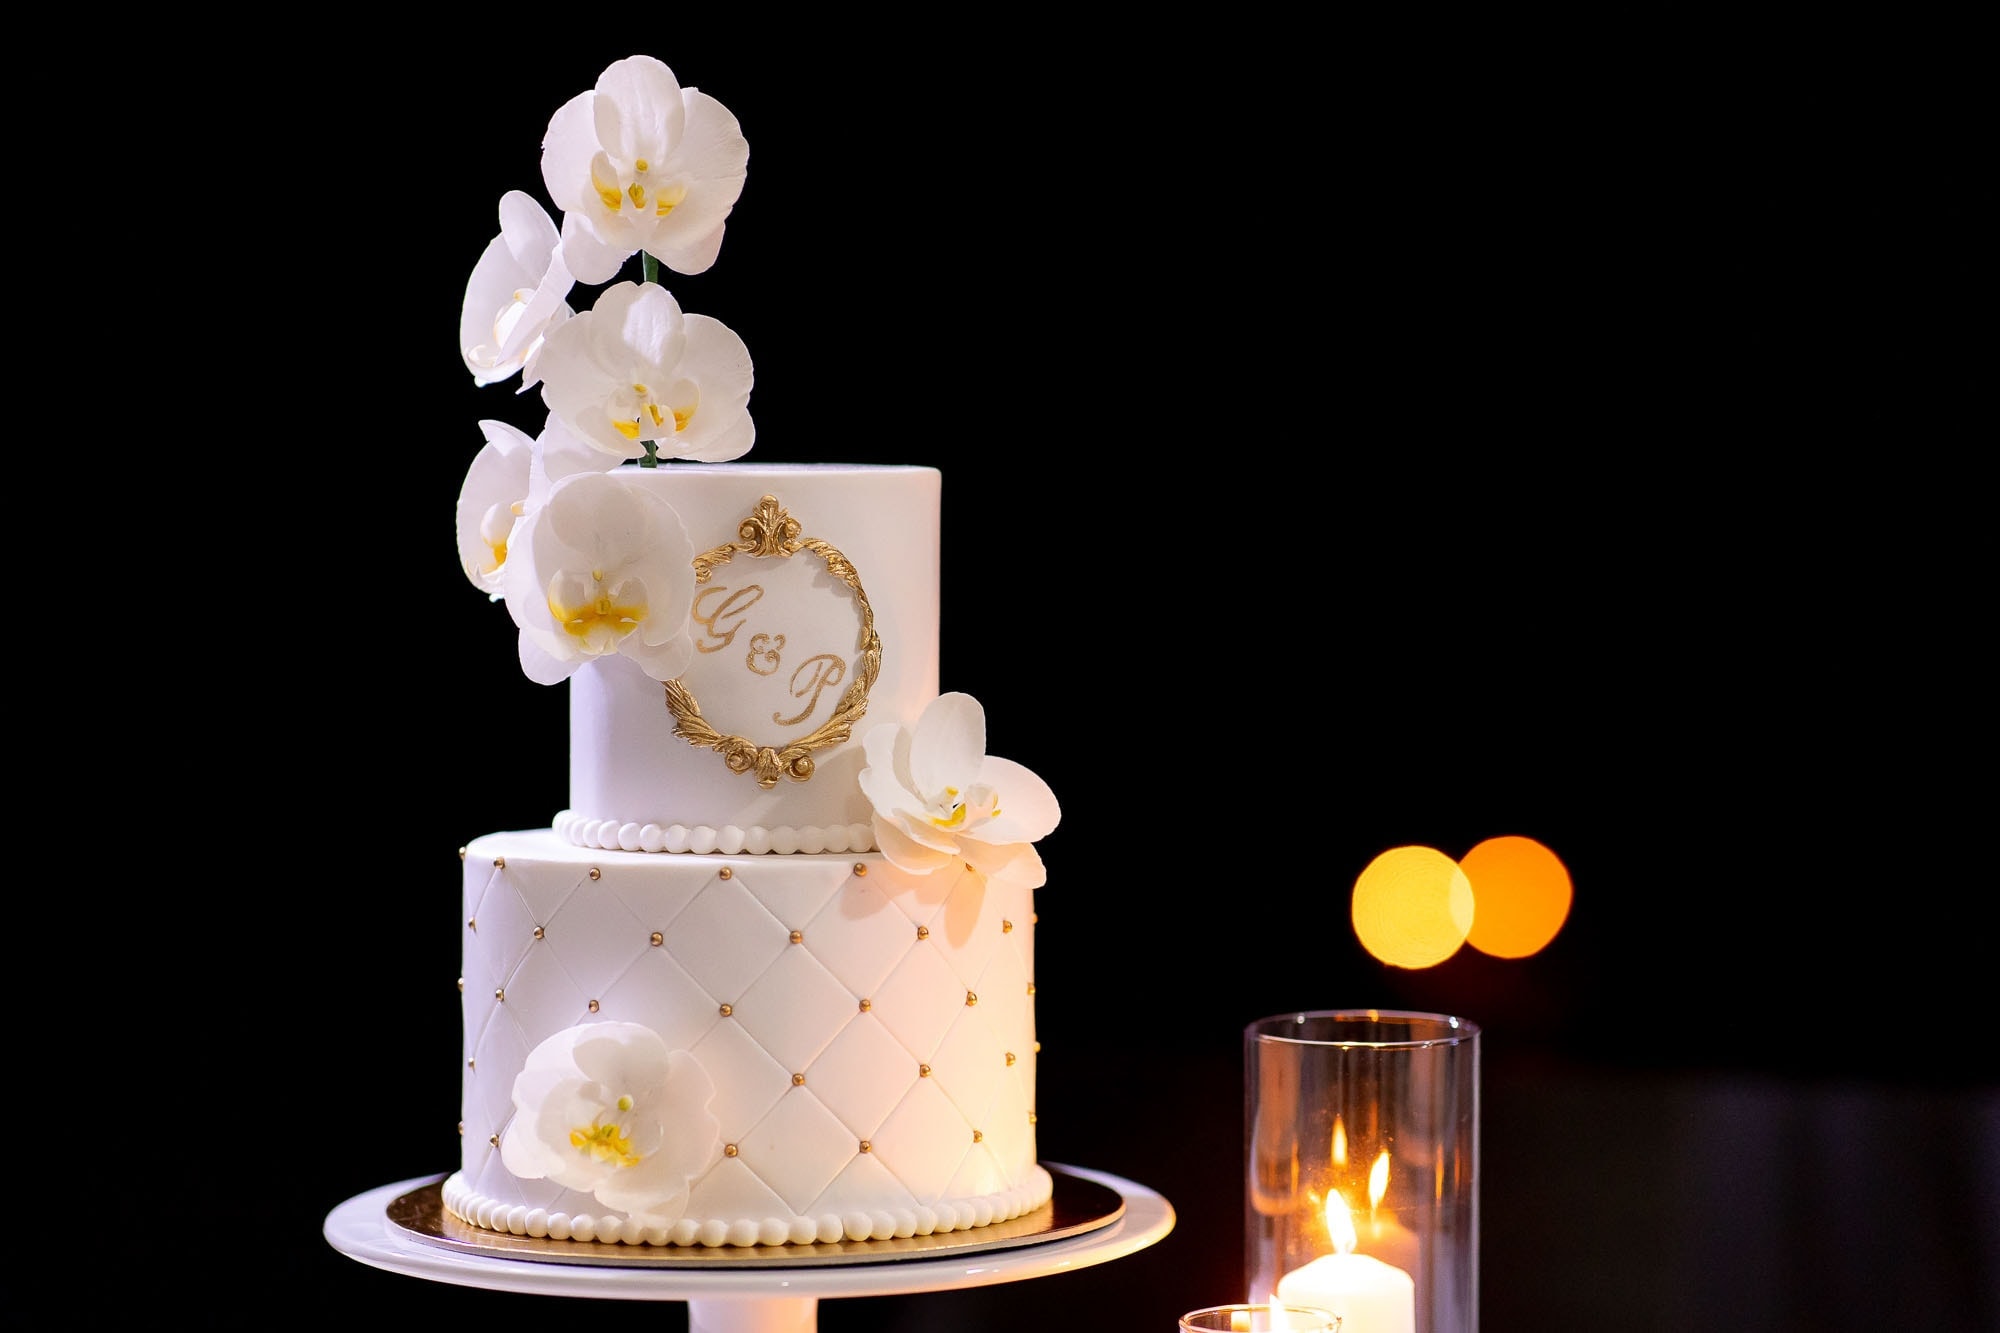 Beautiful white and gold wedding cake